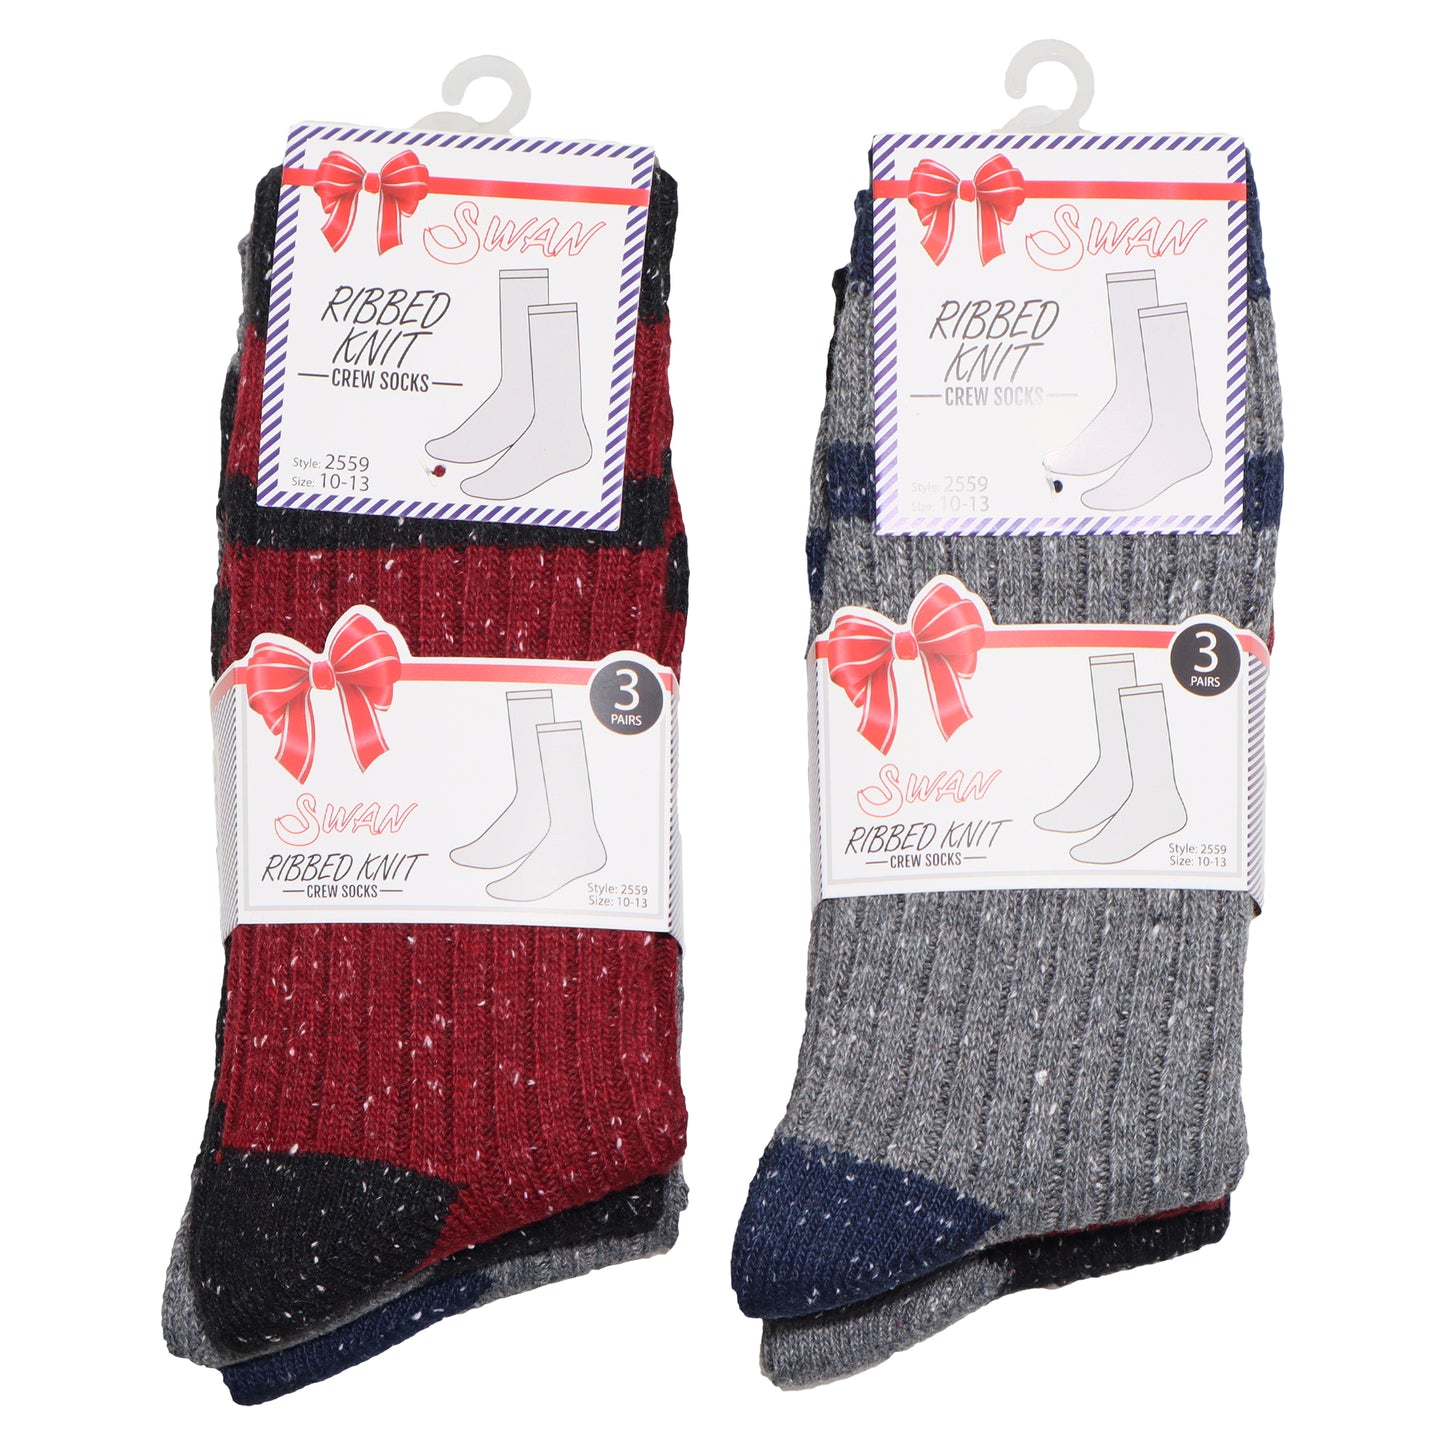 Men's Rib Knit Crew Socks (6-Pairs)